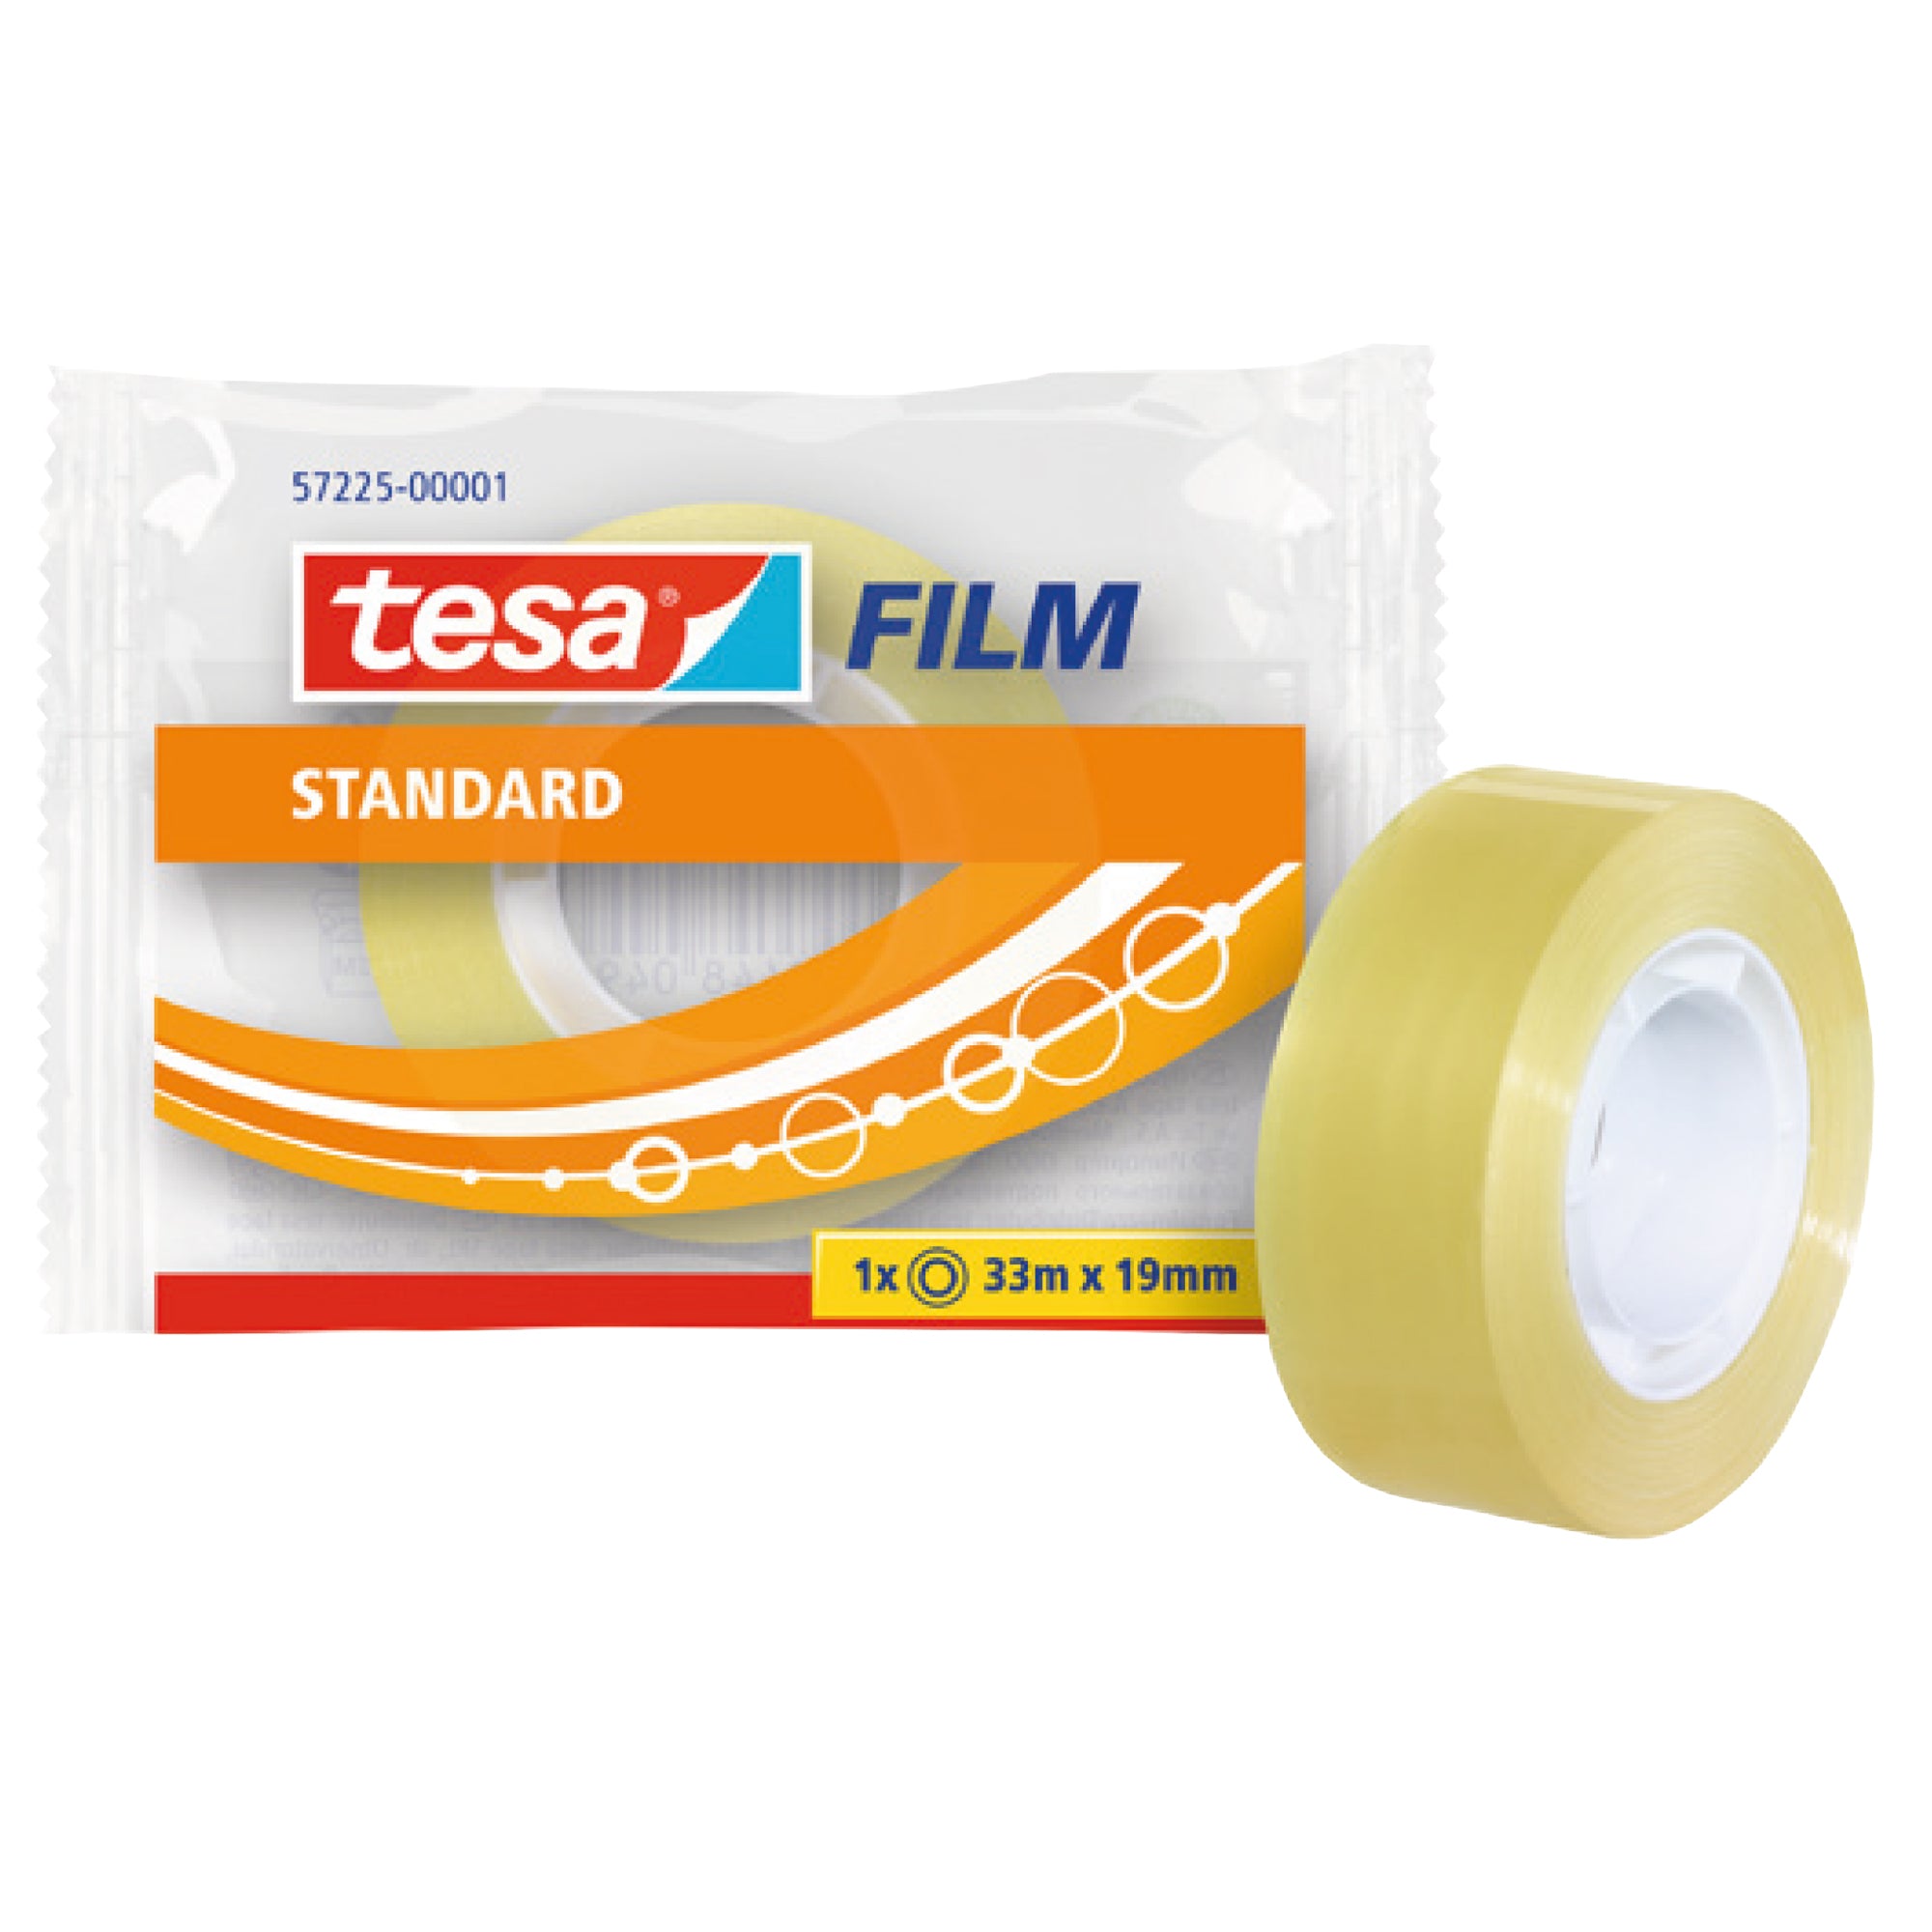 tesa-nastro-adesivo-trasparente-film-33mx19mm-conf-singolarmente